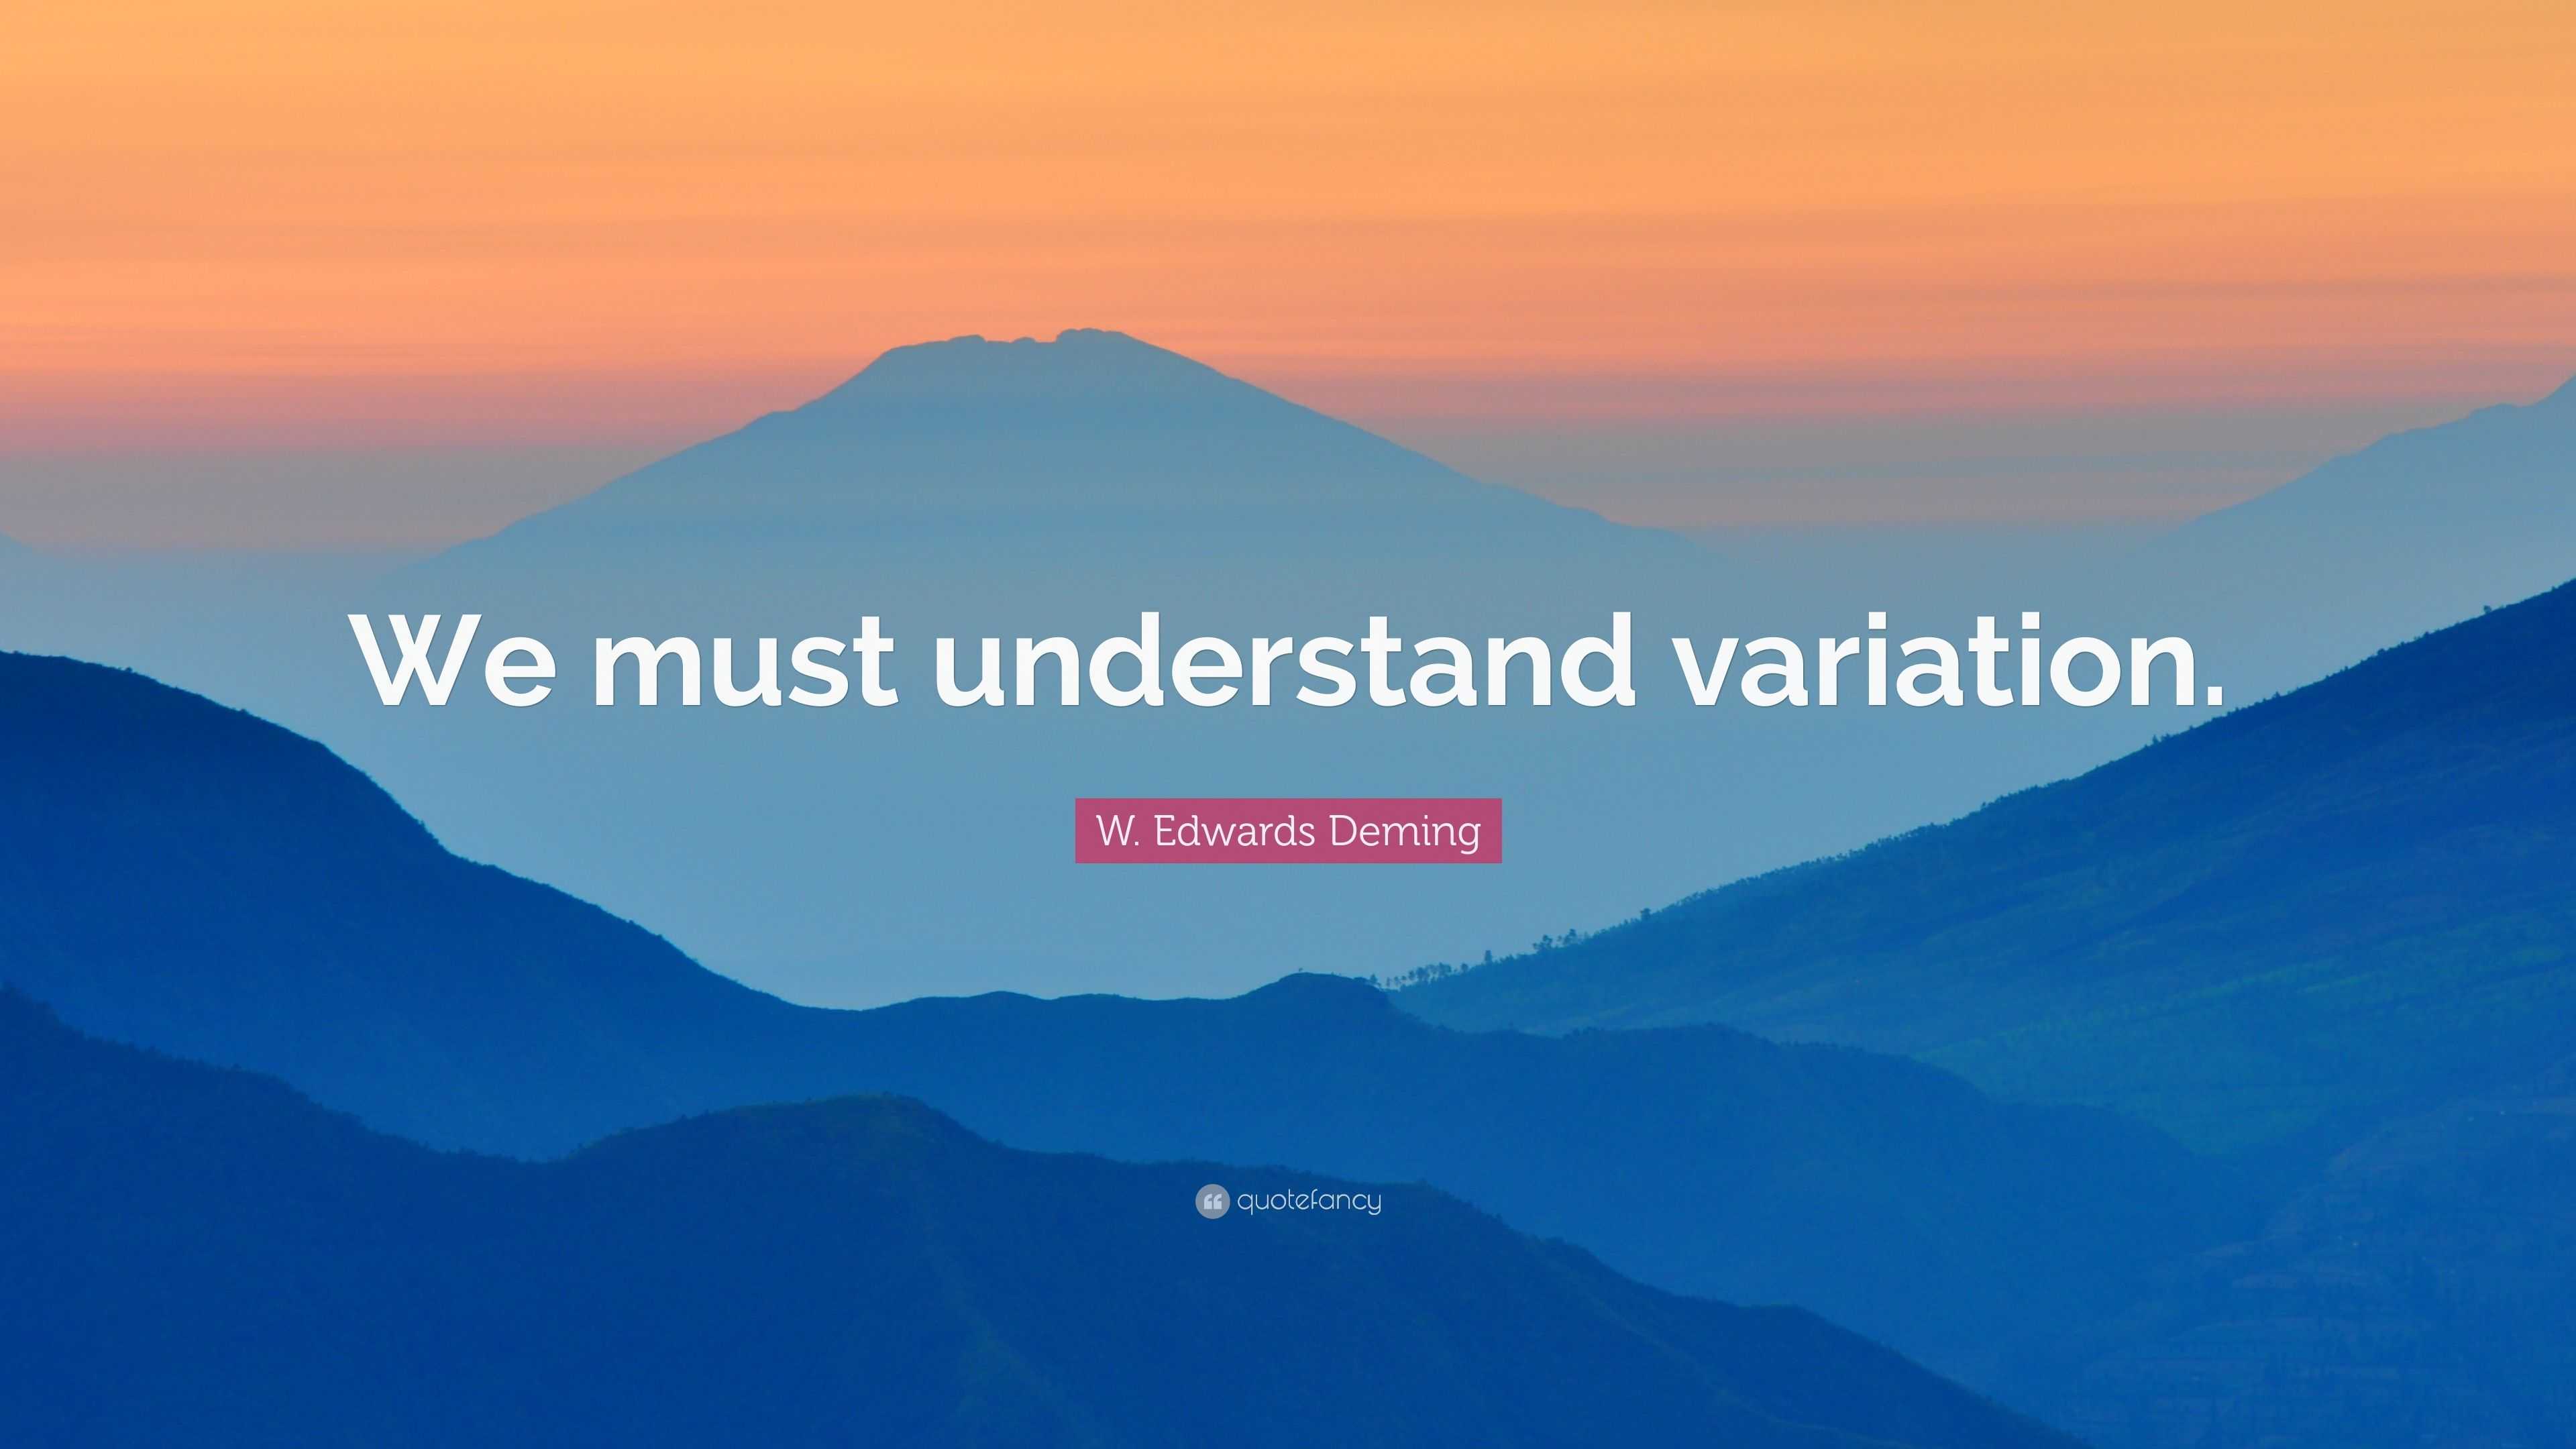 W. Edwards Deming Quote: “We must understand variation.”